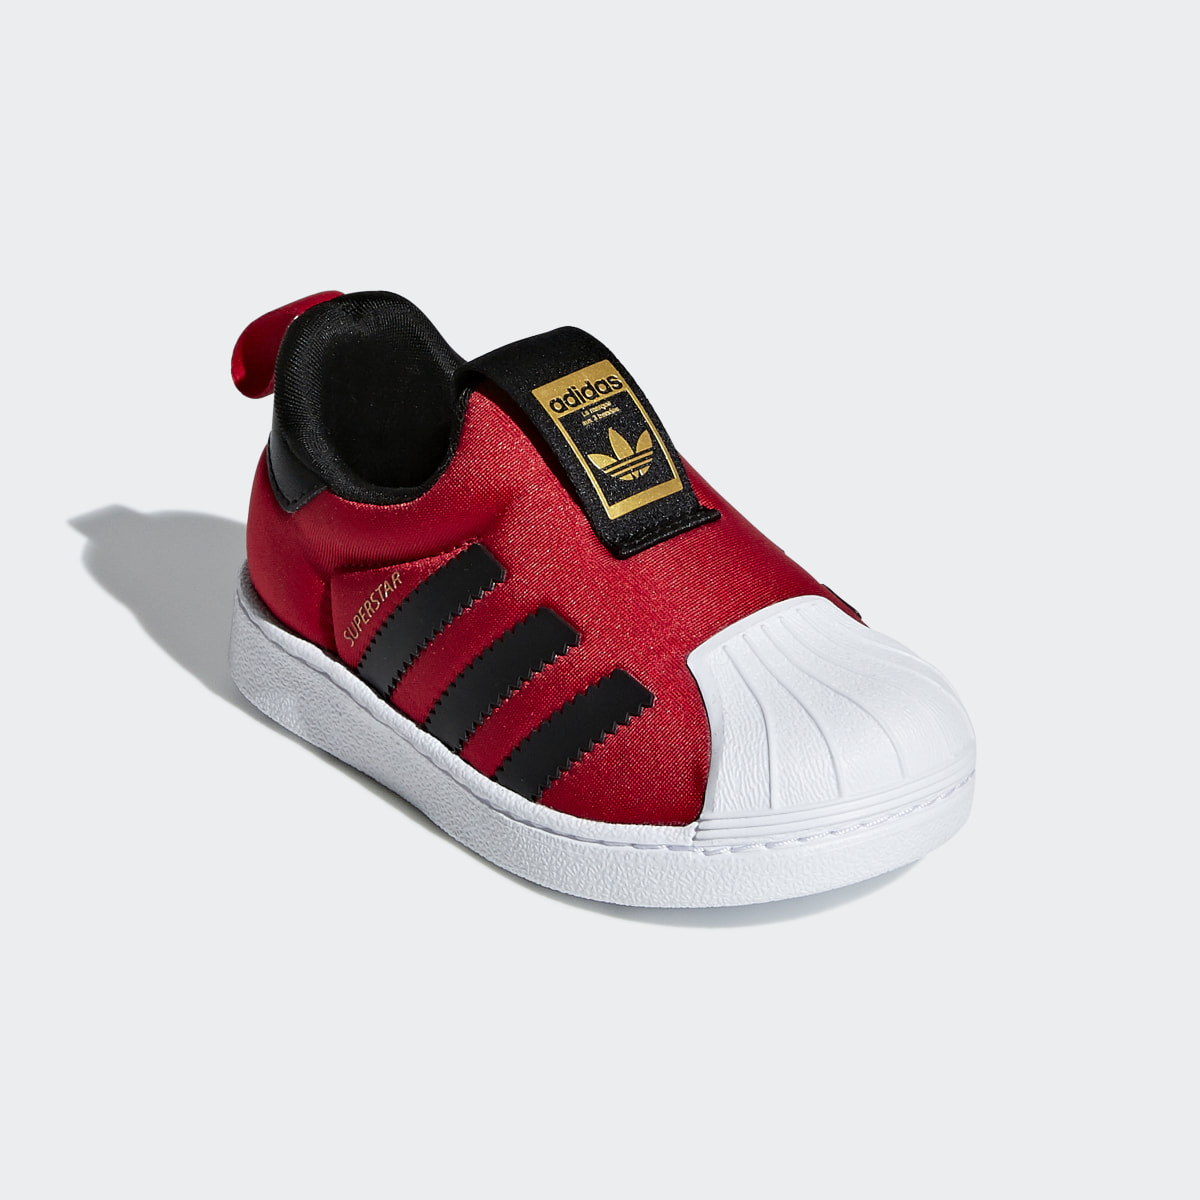 Adidas Superstar 360 Shoes. 6